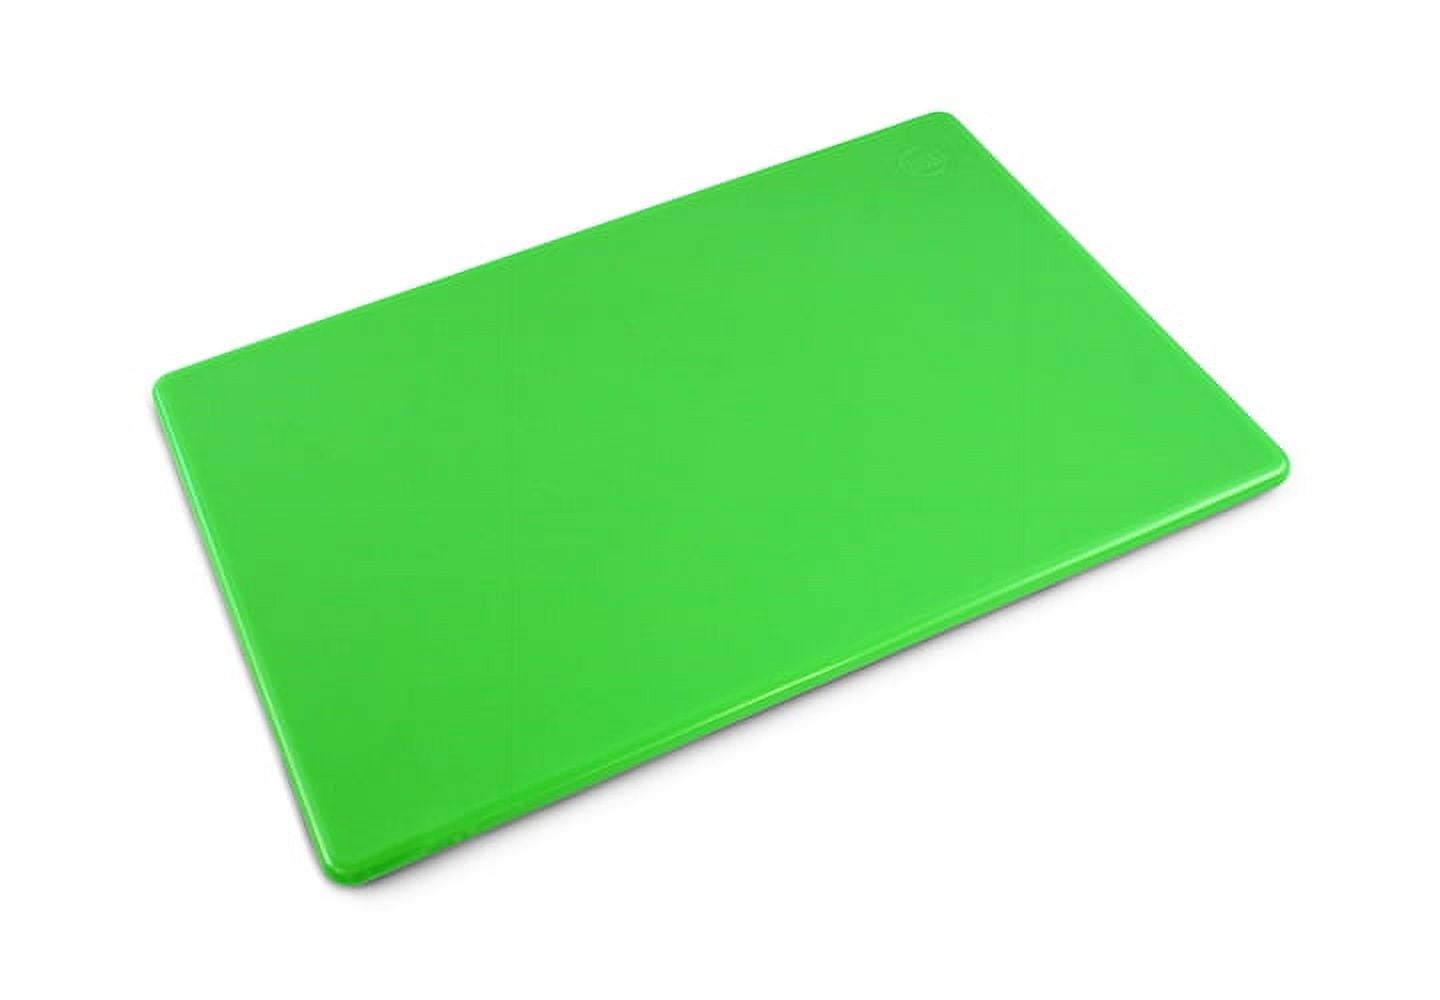 Commercial Purple Plastic Cutting Board - 20 x 15 x 1/2 